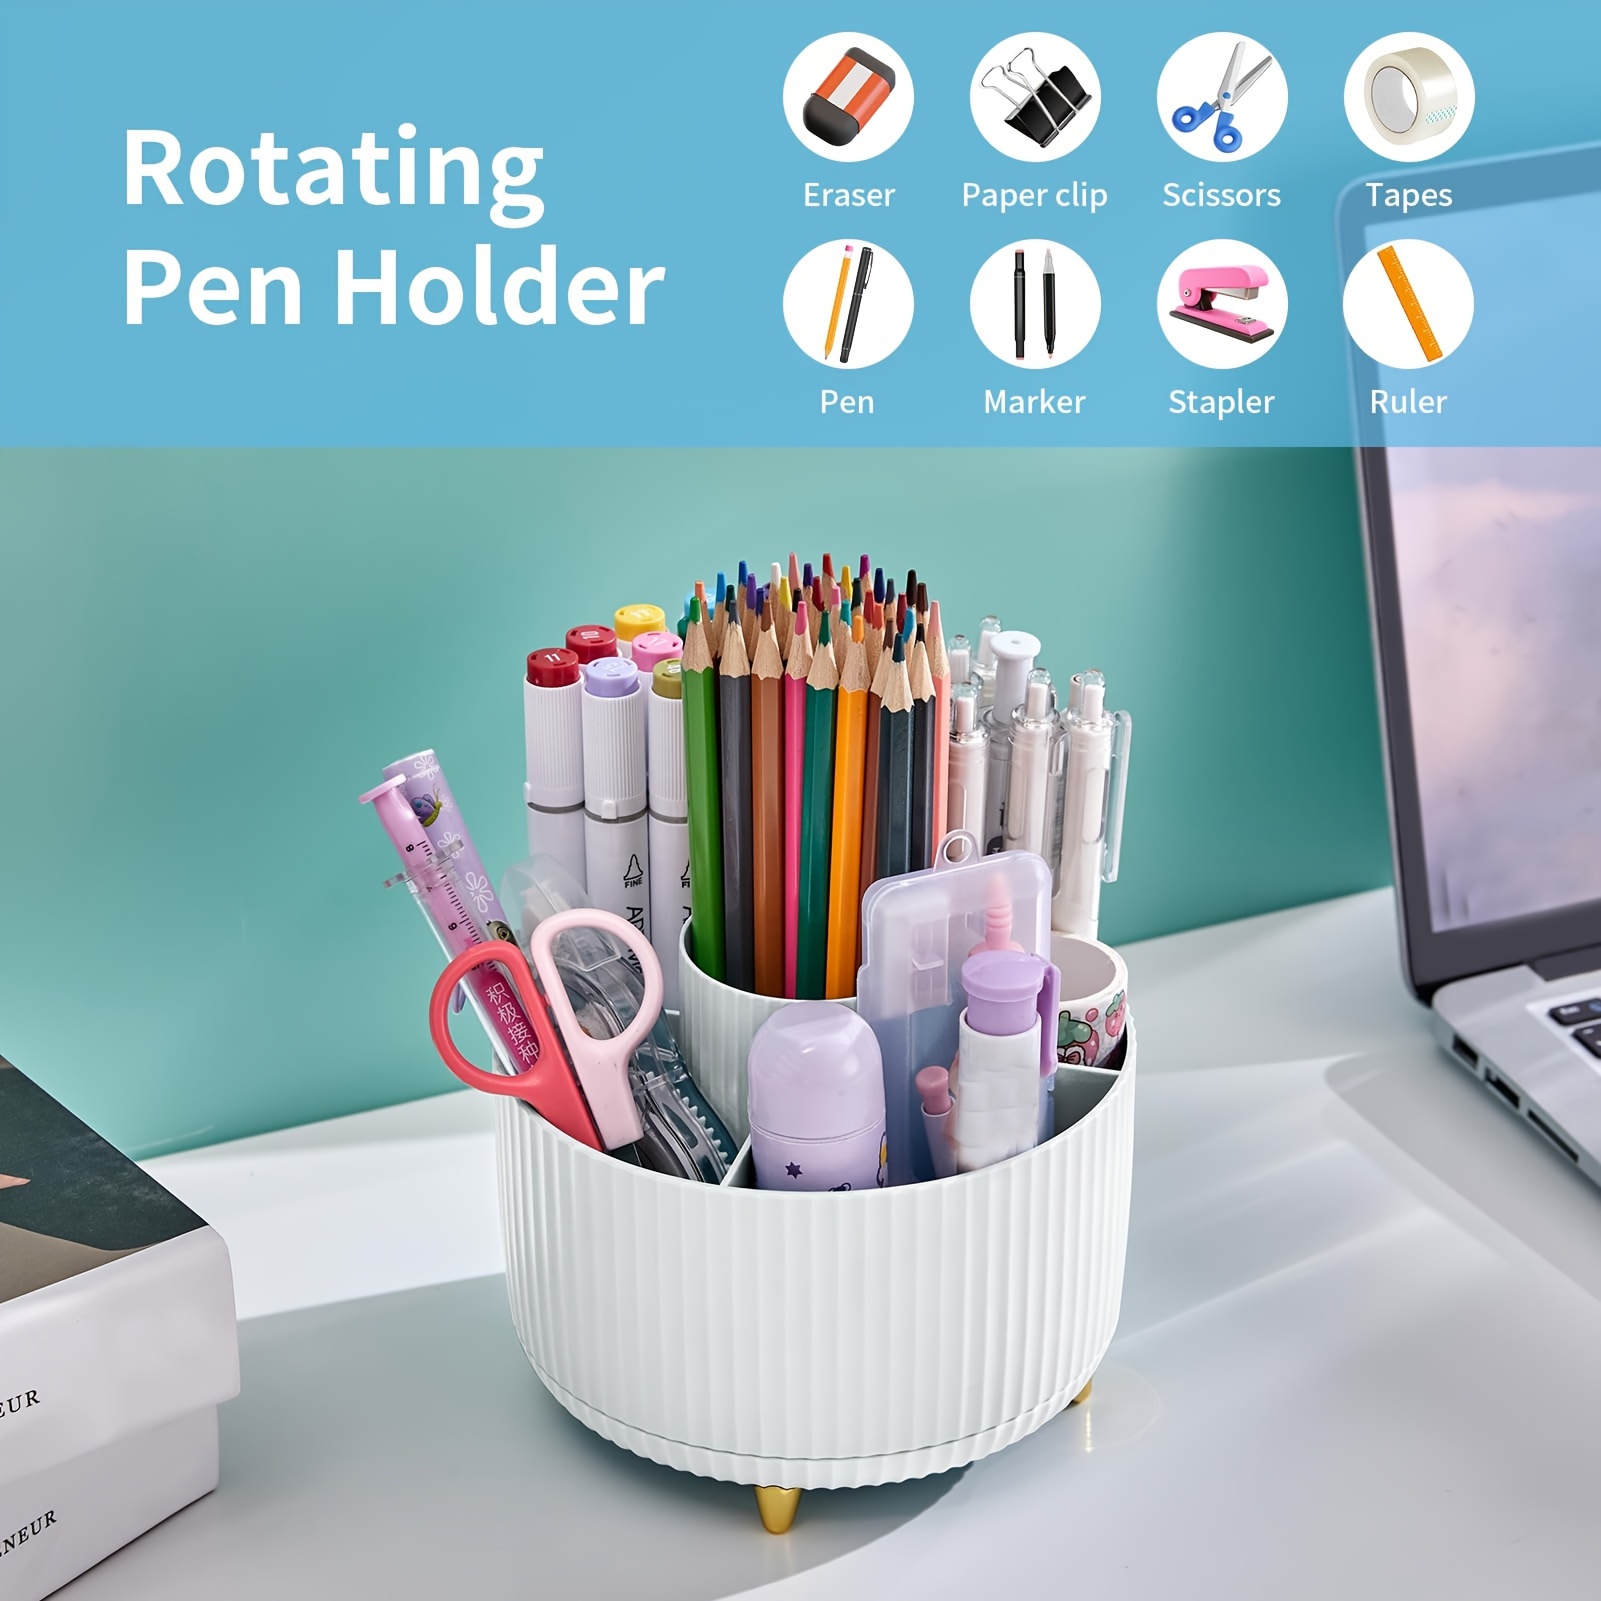 Rotating Pencil Holder for Desk, Mesh Desk Caddy, Desk Pen Organizer with 7 Slots, Pen Holder for Desk, 360-Degree Rotating Desk Organizer, Pencil